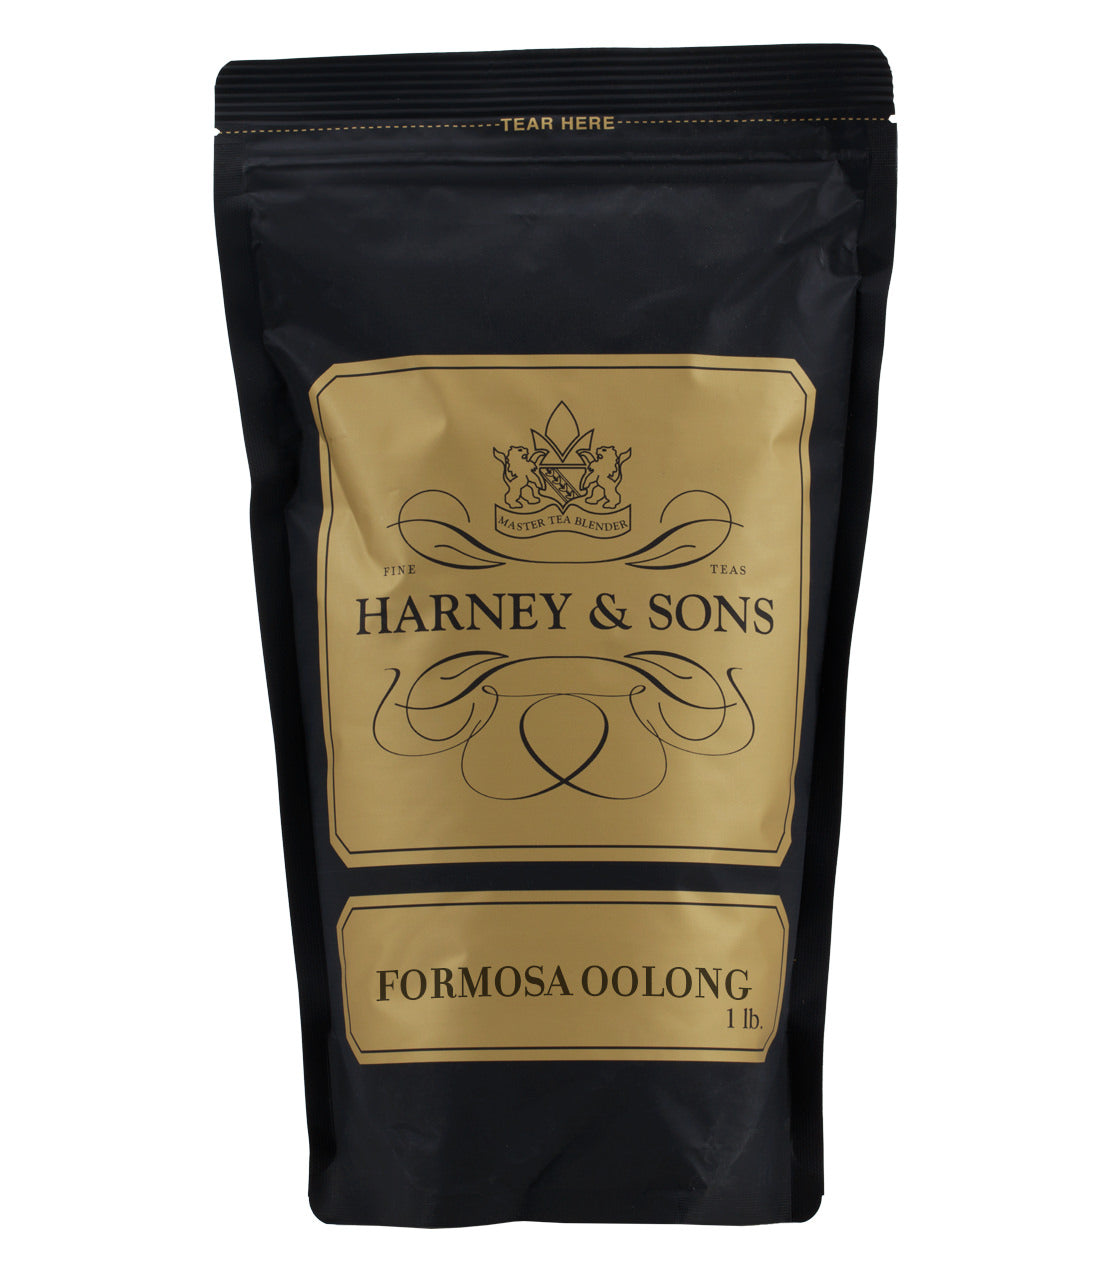 Formosa Oolong - Loose 1 lb. Bag - Harney & Sons Fine Teas